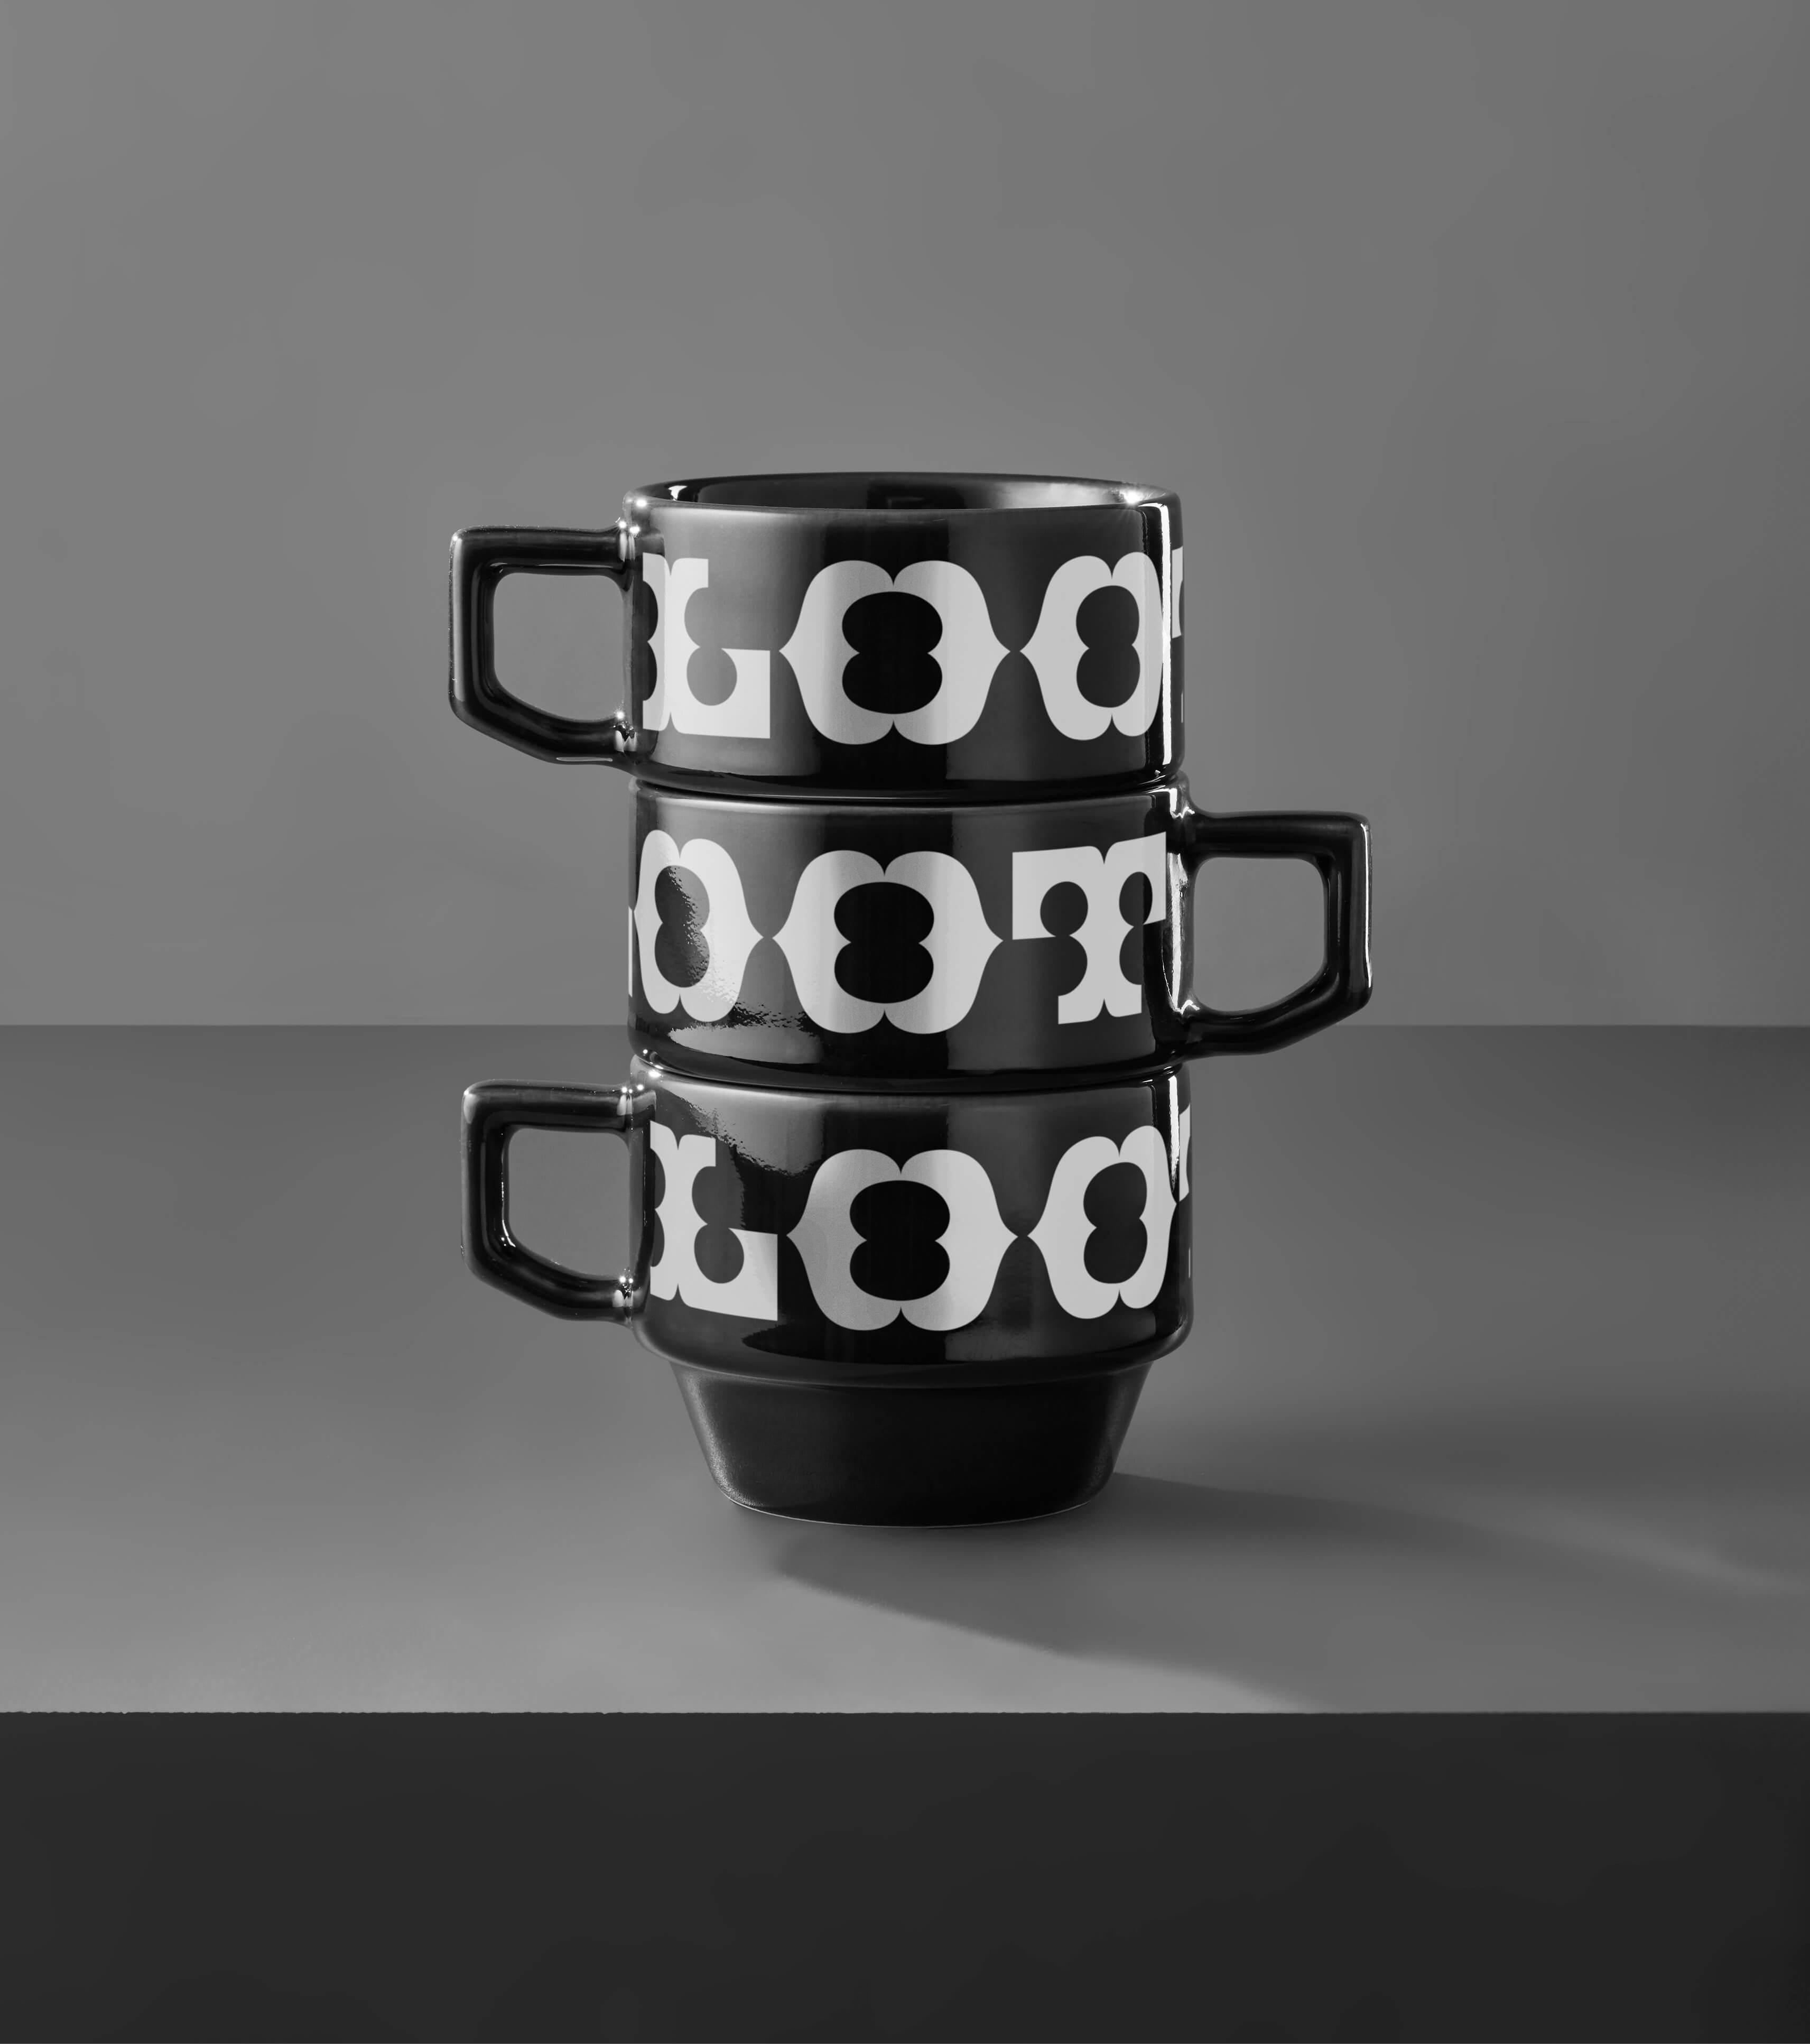 Logotype, packaging, merchandise and website design by Seachange Studio for Australia coffee roaster Loot